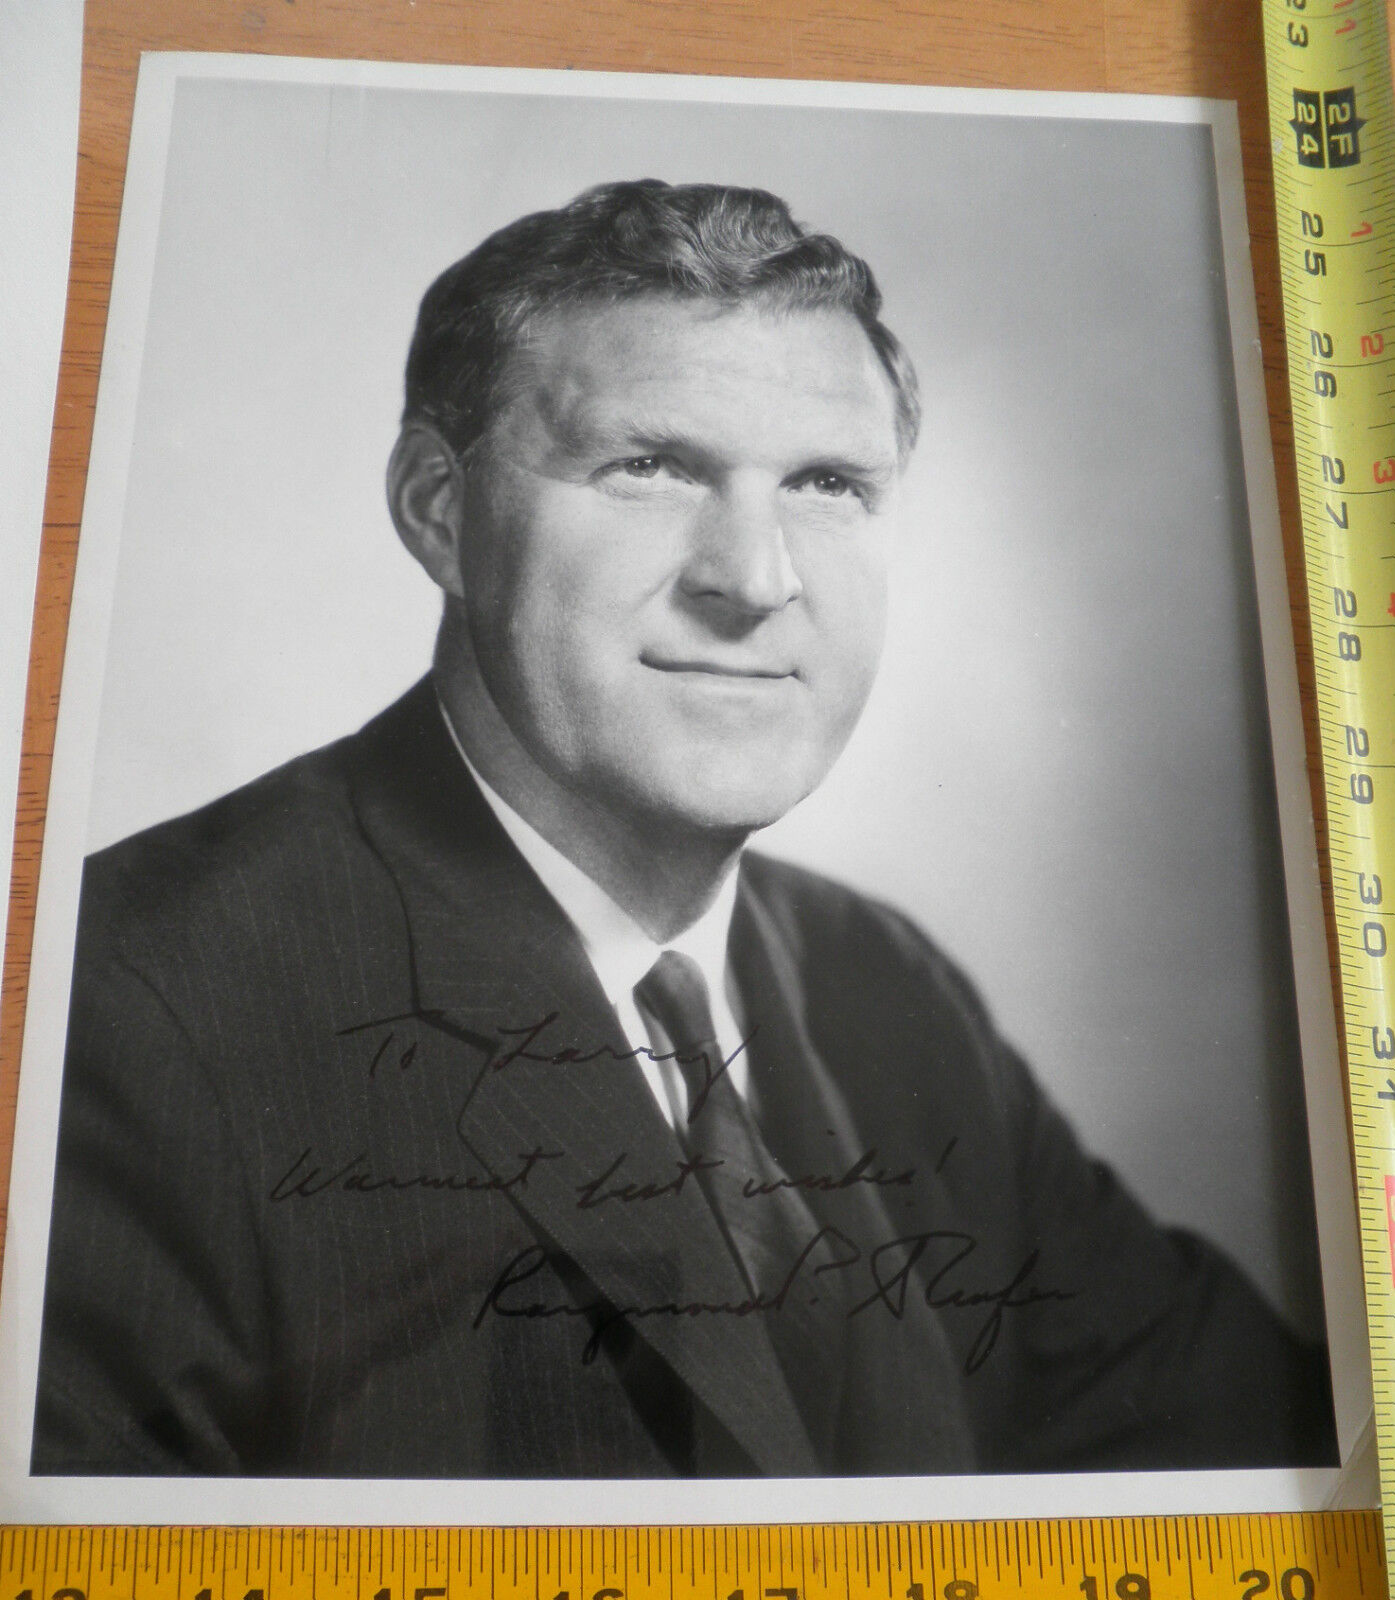 1968 Governor Raymond Shafer signed photo in original Pennsylvania envelope